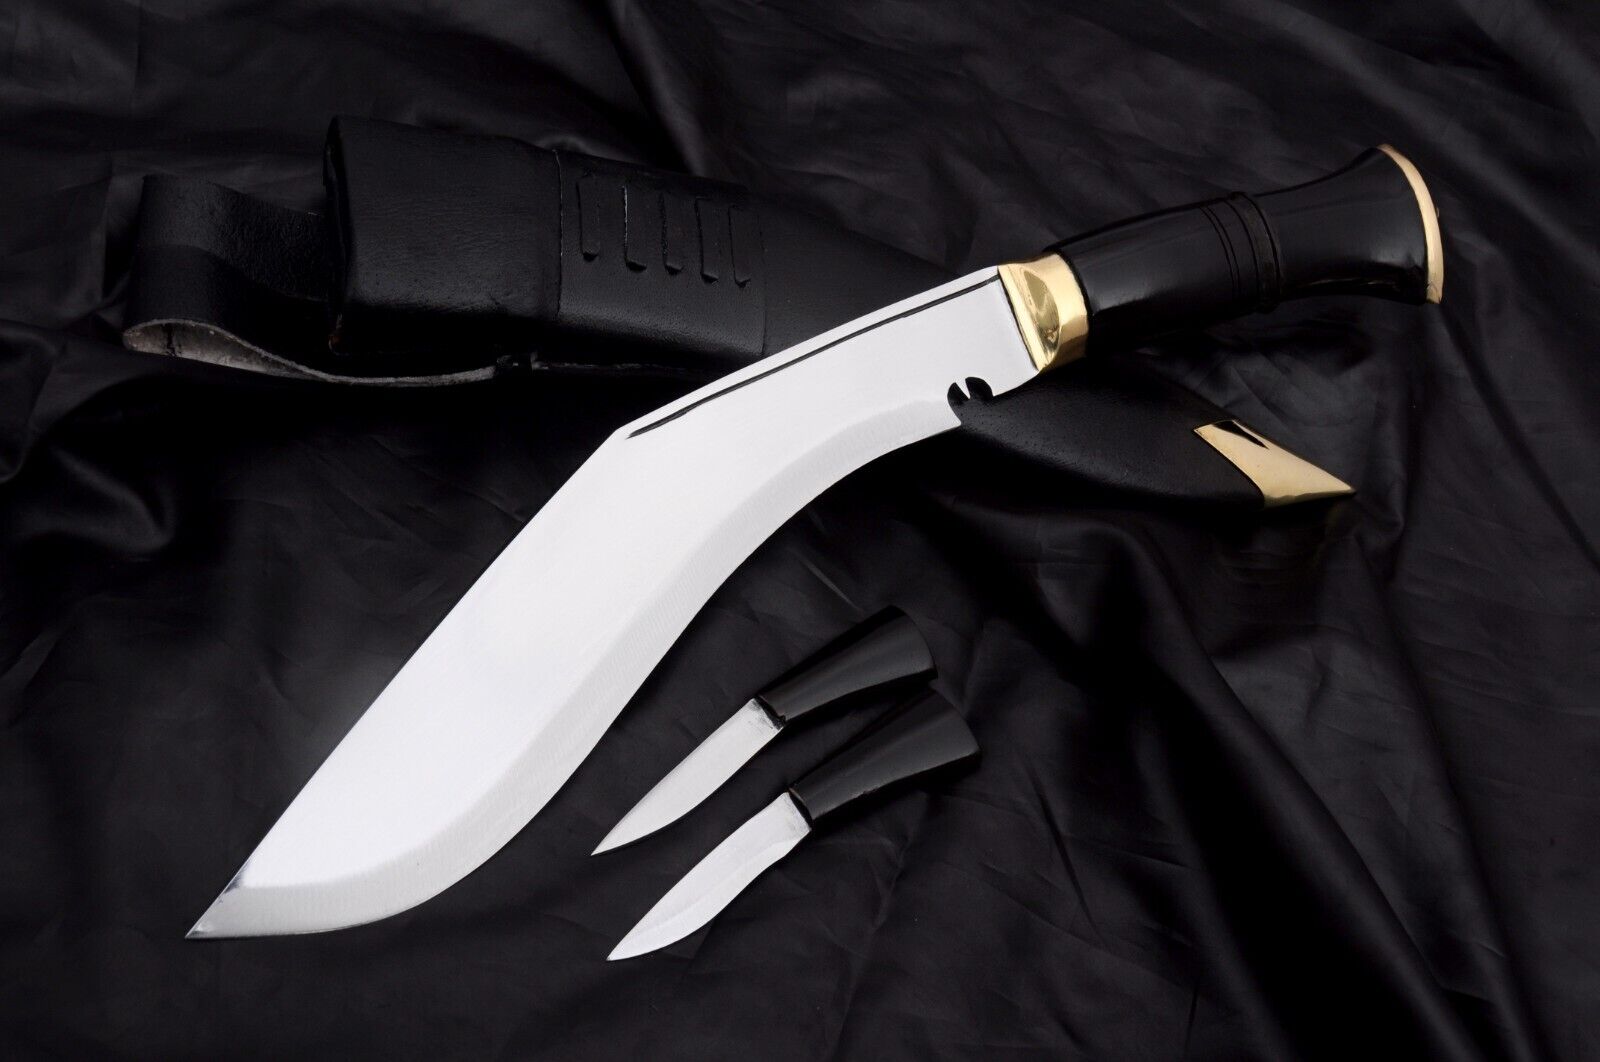 Gurkha kukri knife-Official issue khukuri-combat knife-hunting,camping,tactical